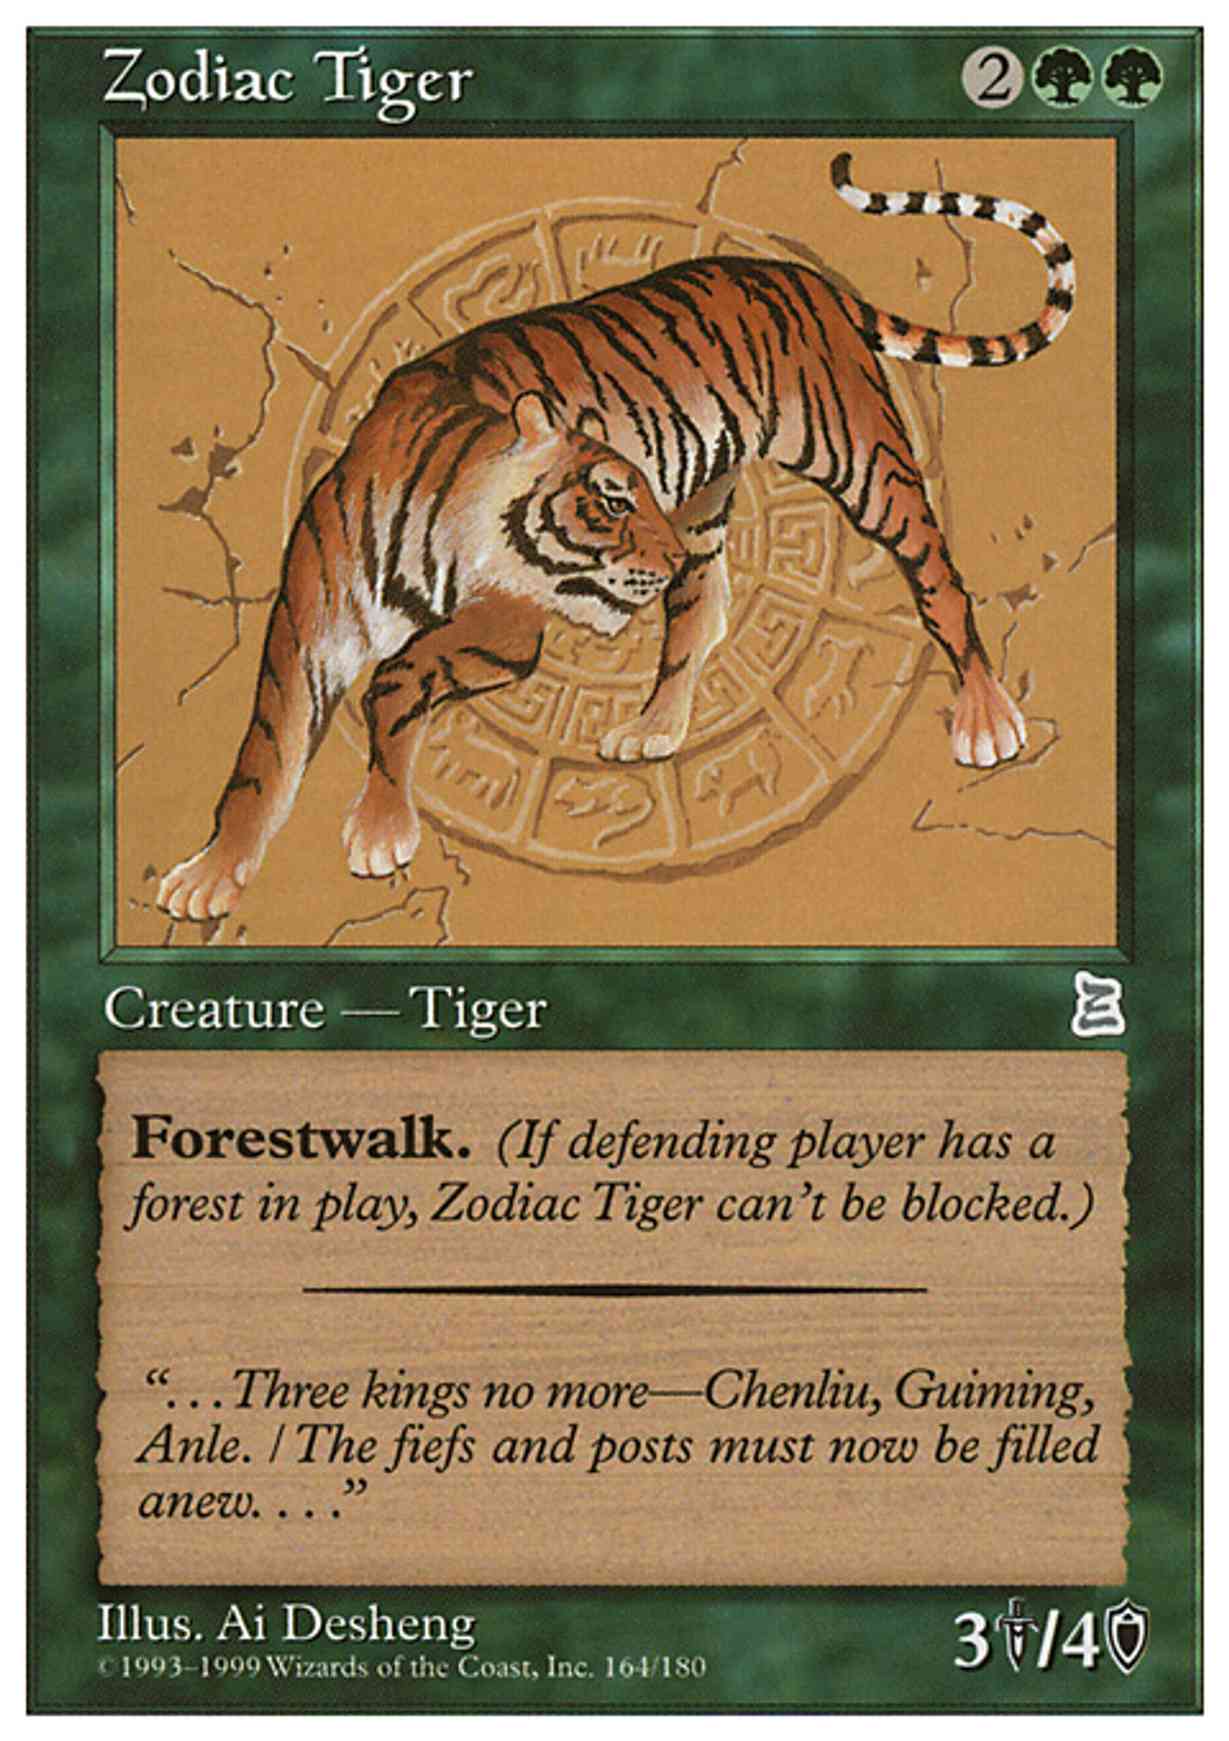 Zodiac Tiger magic card front